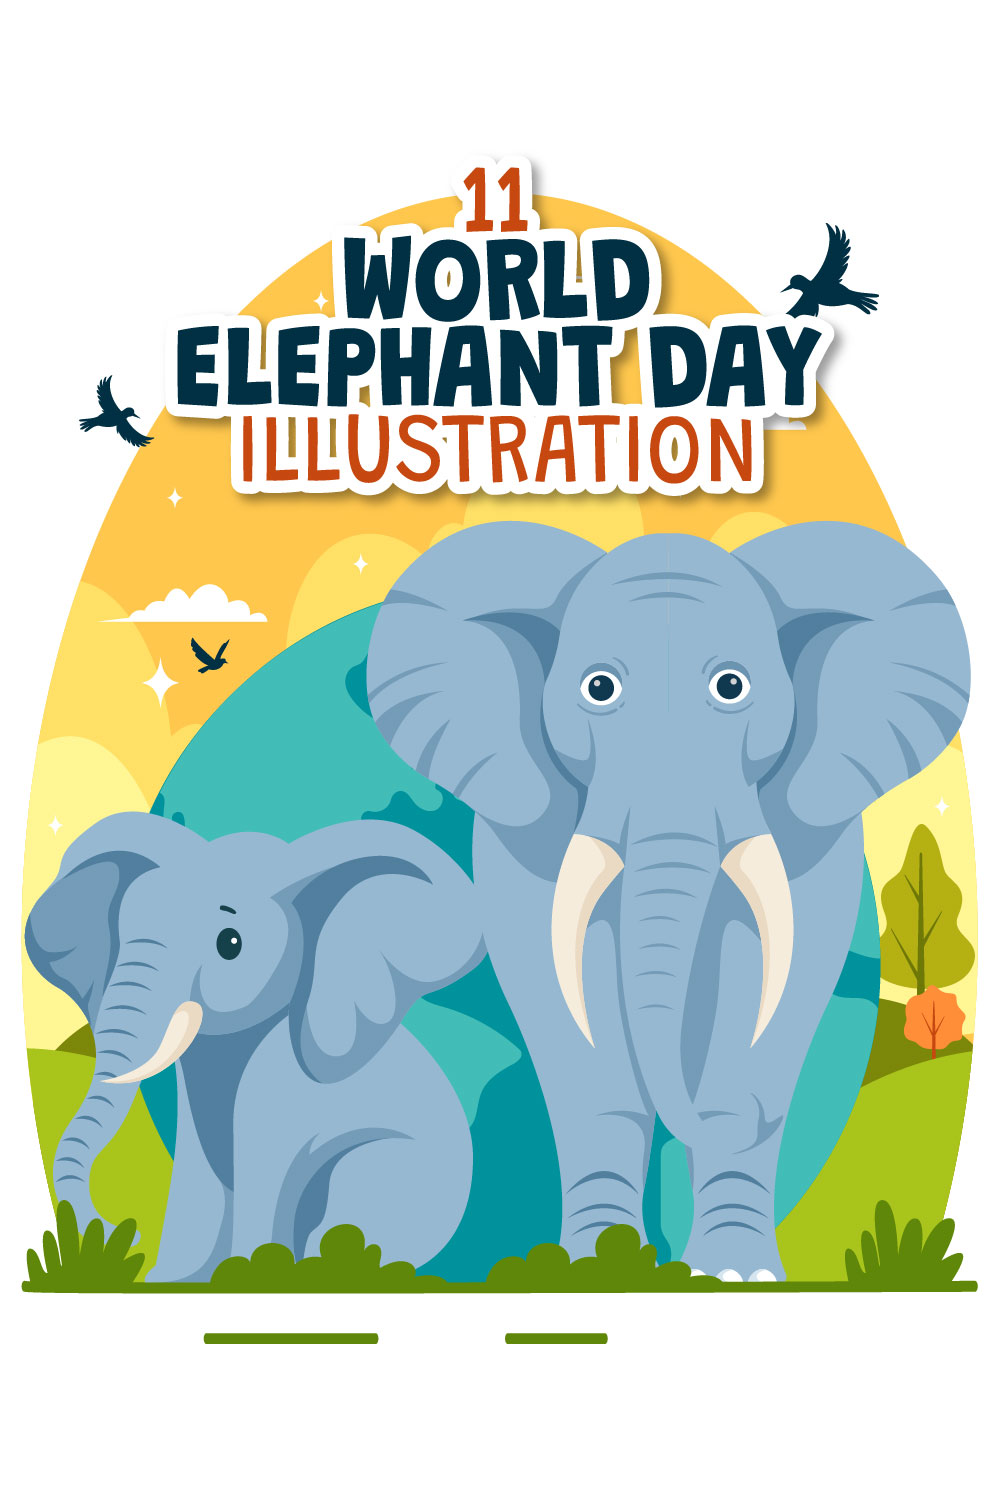 11 World Elephant Day Illustration pinterest preview image.